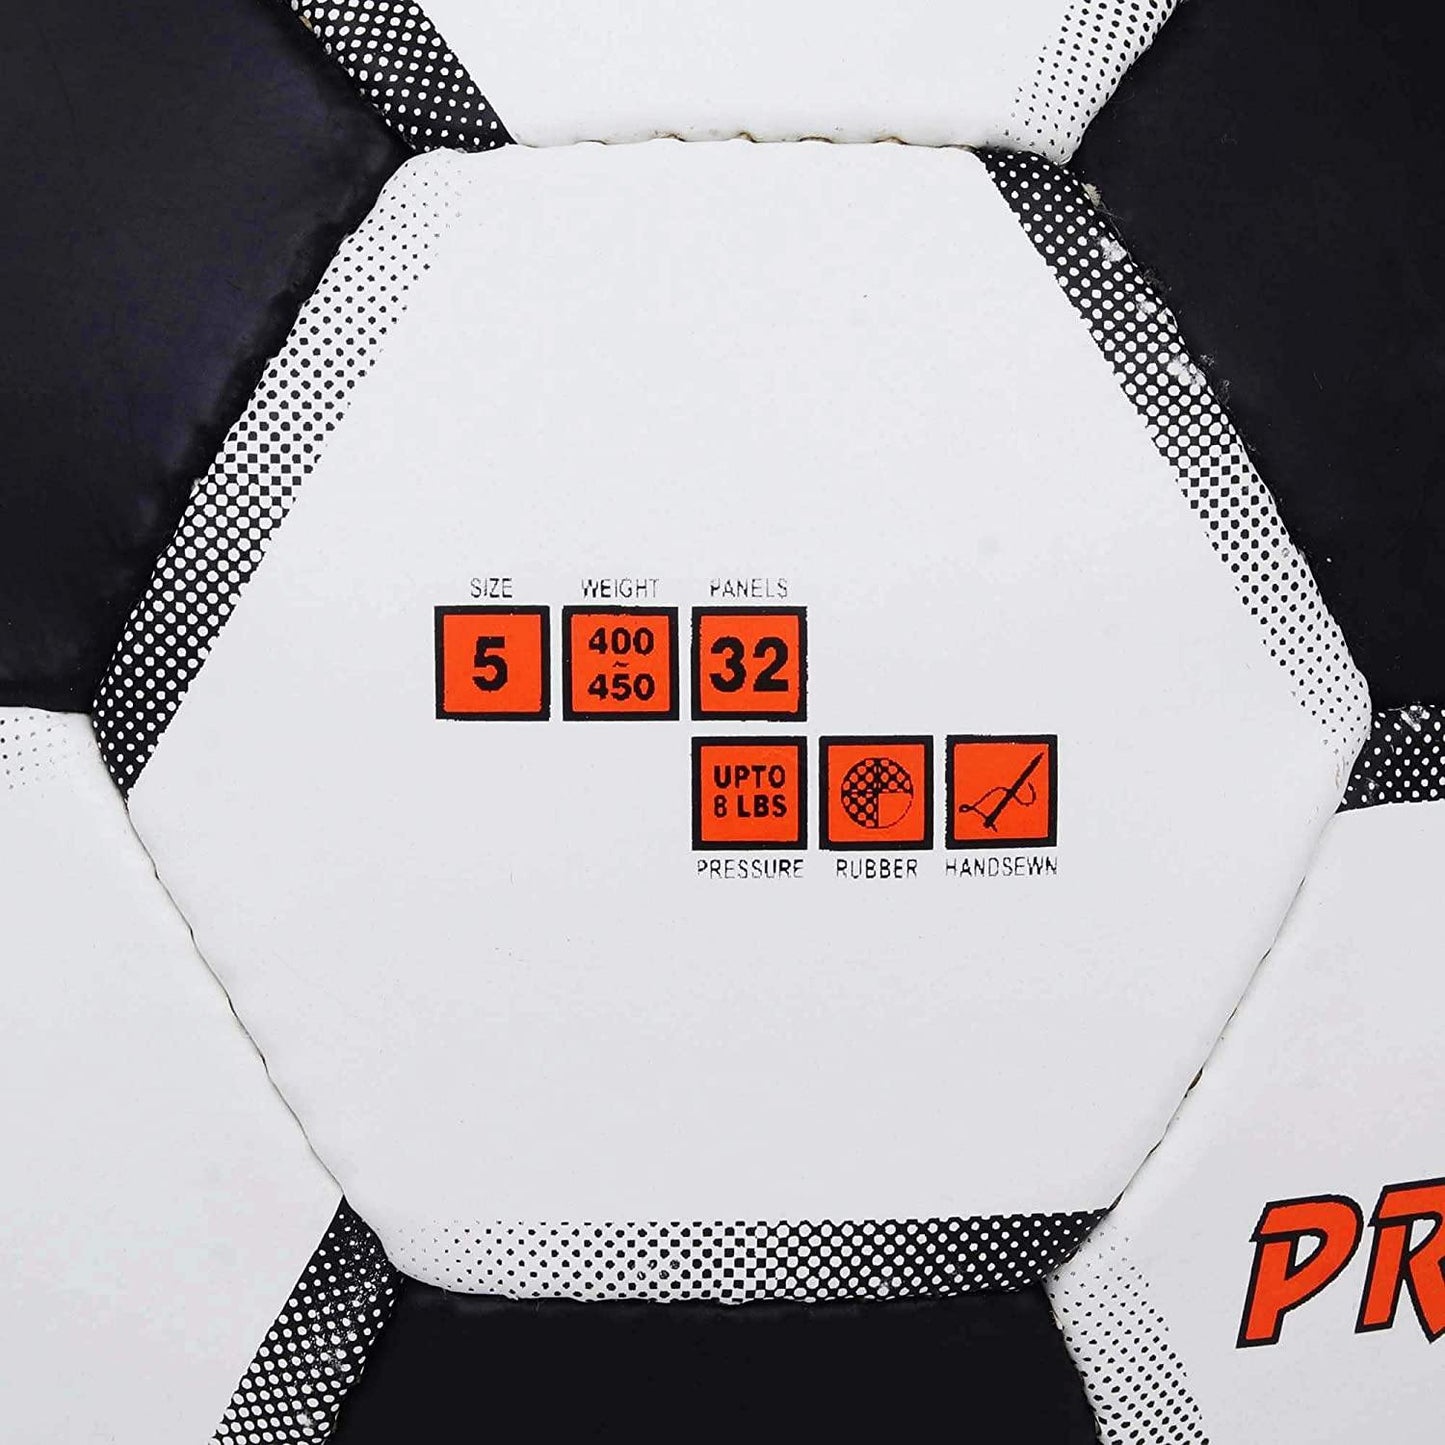 Cosco Premier Football - White/Black - Best Price online Prokicksports.com